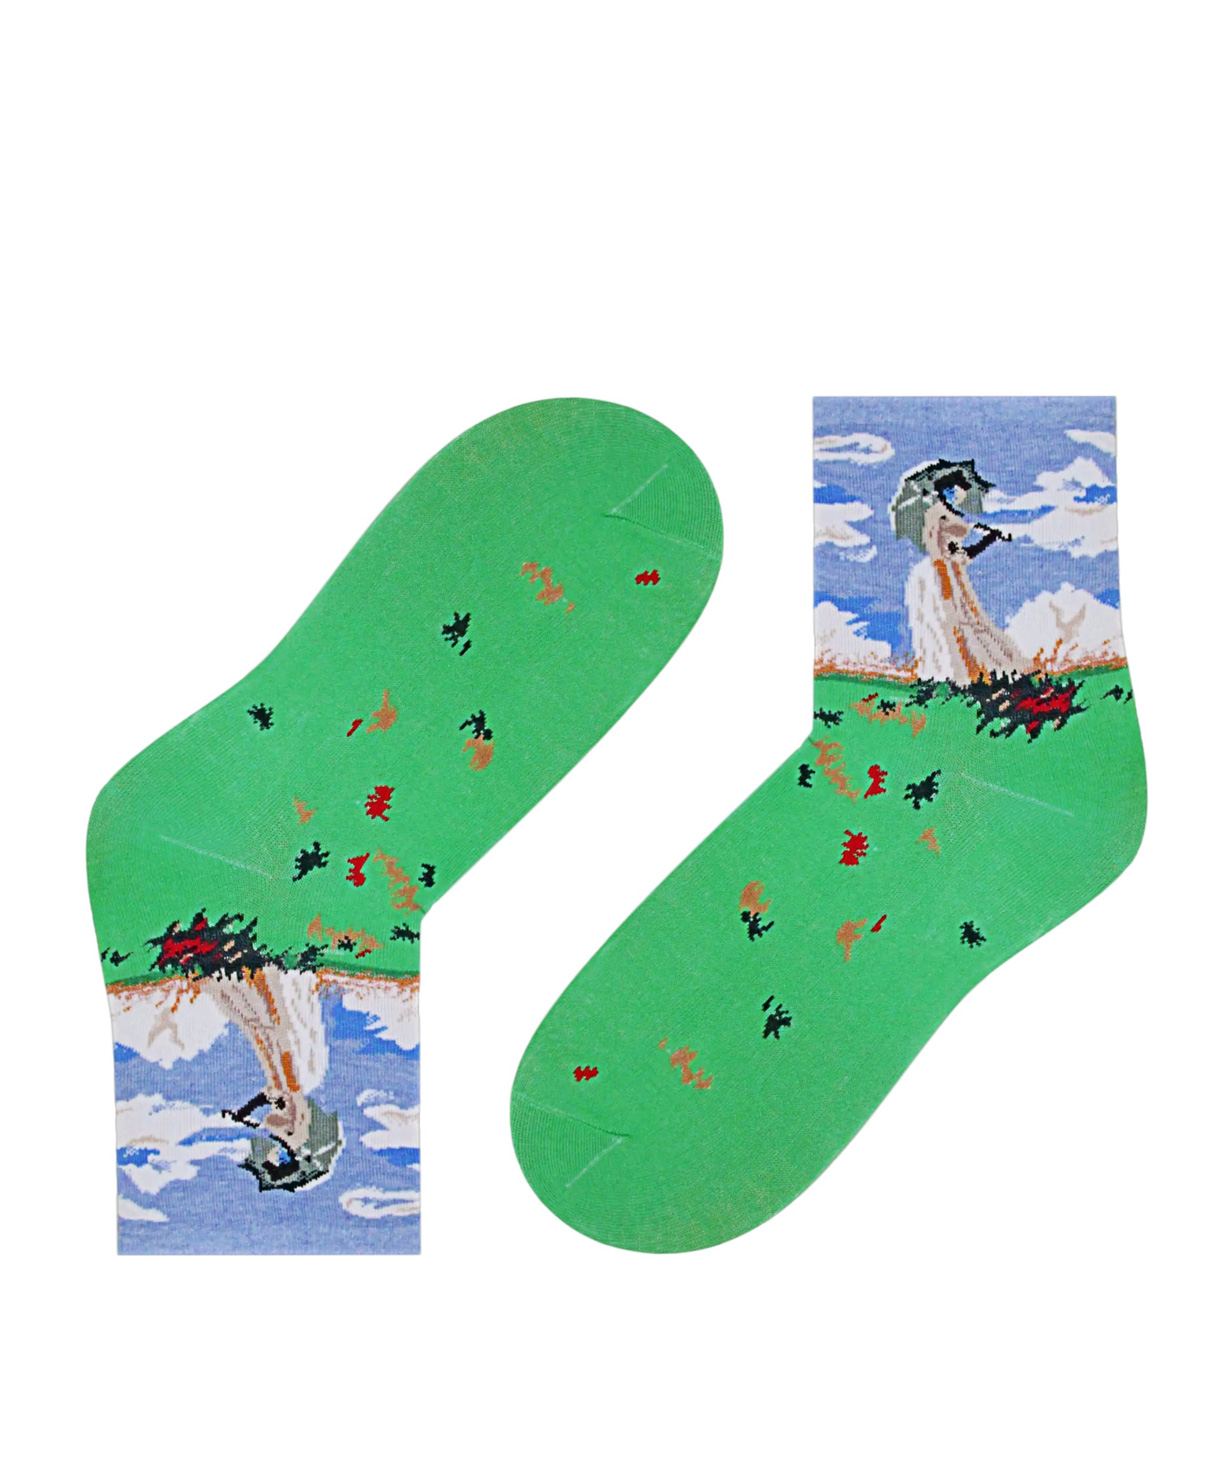 Socks `Zeal Socks` lady with an umbrella